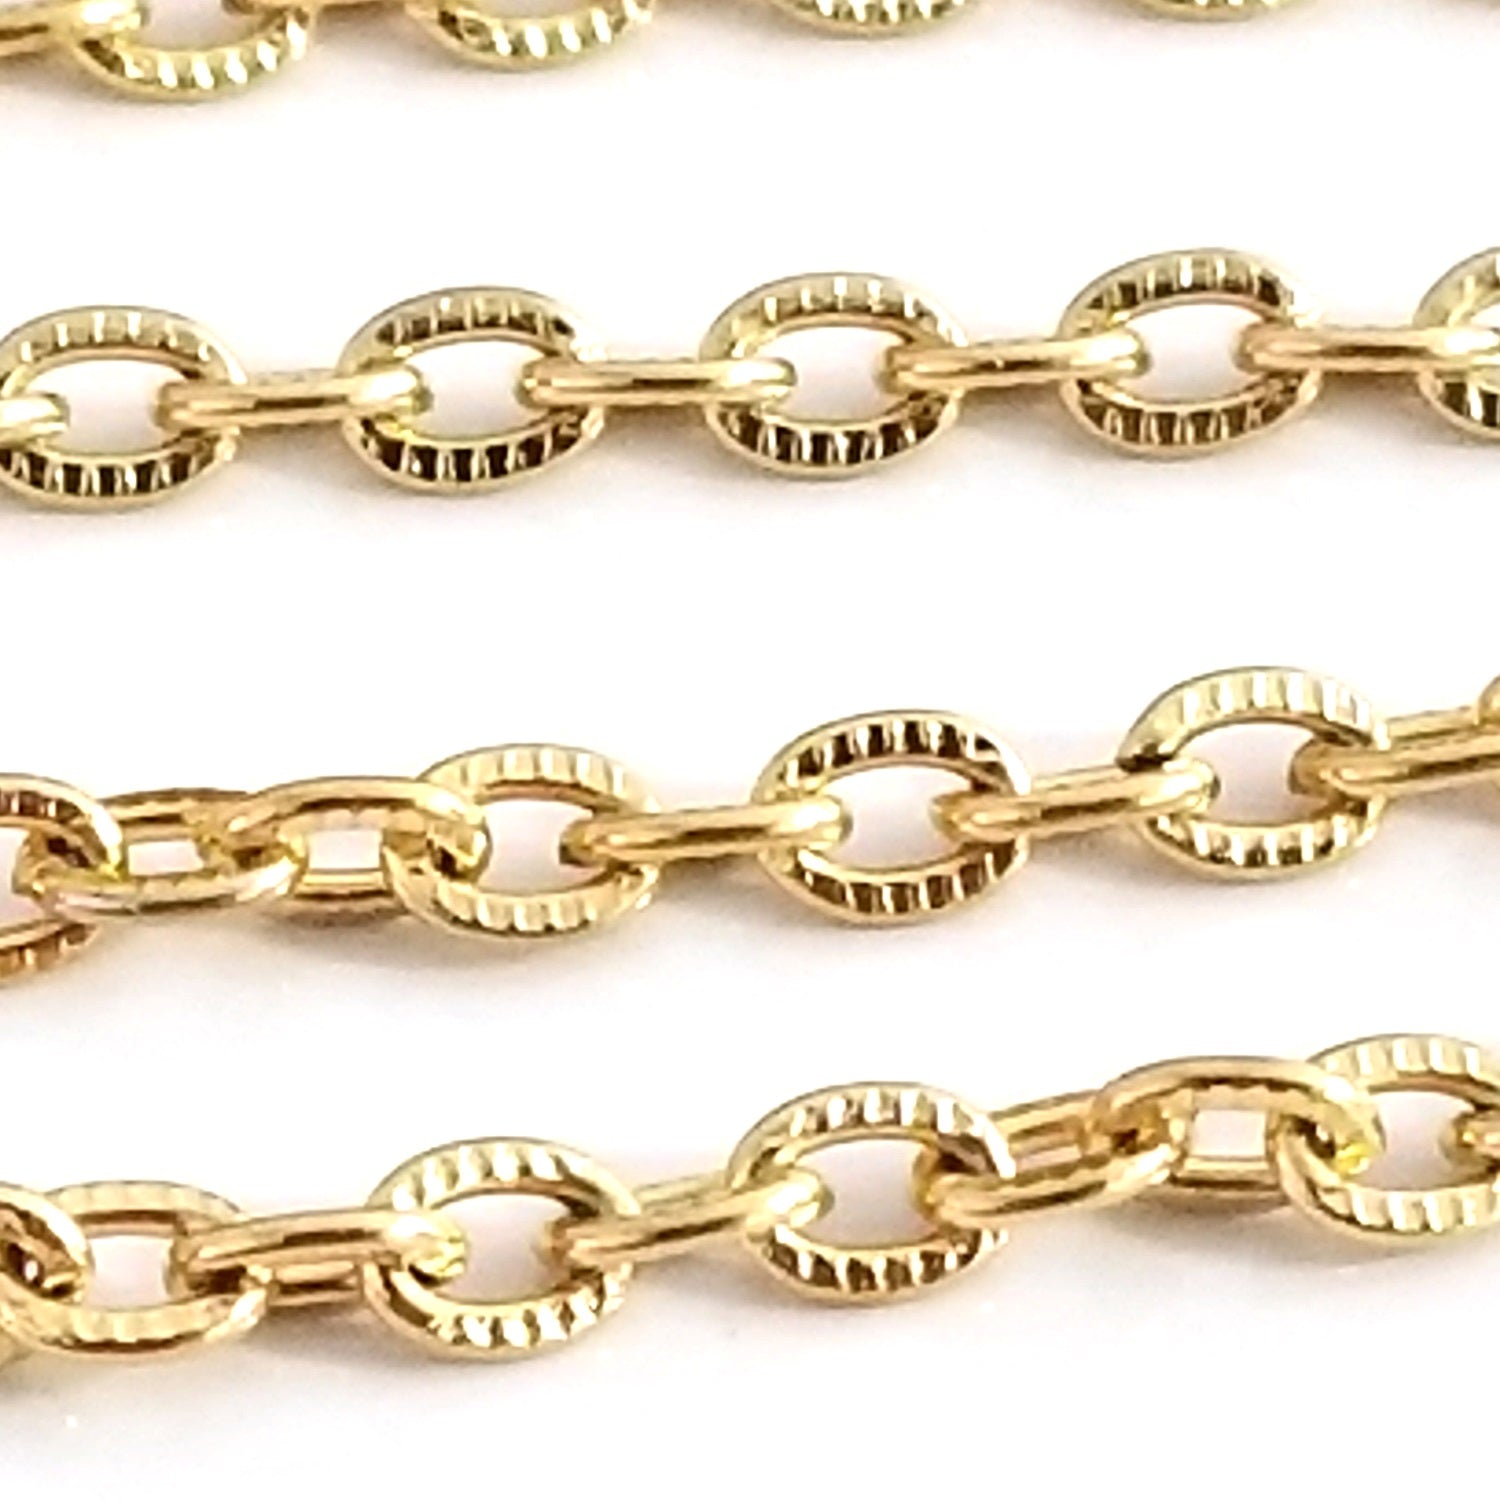 Gold Stainless Steel Chain, Bulk Chain, Jewelry Making Chain